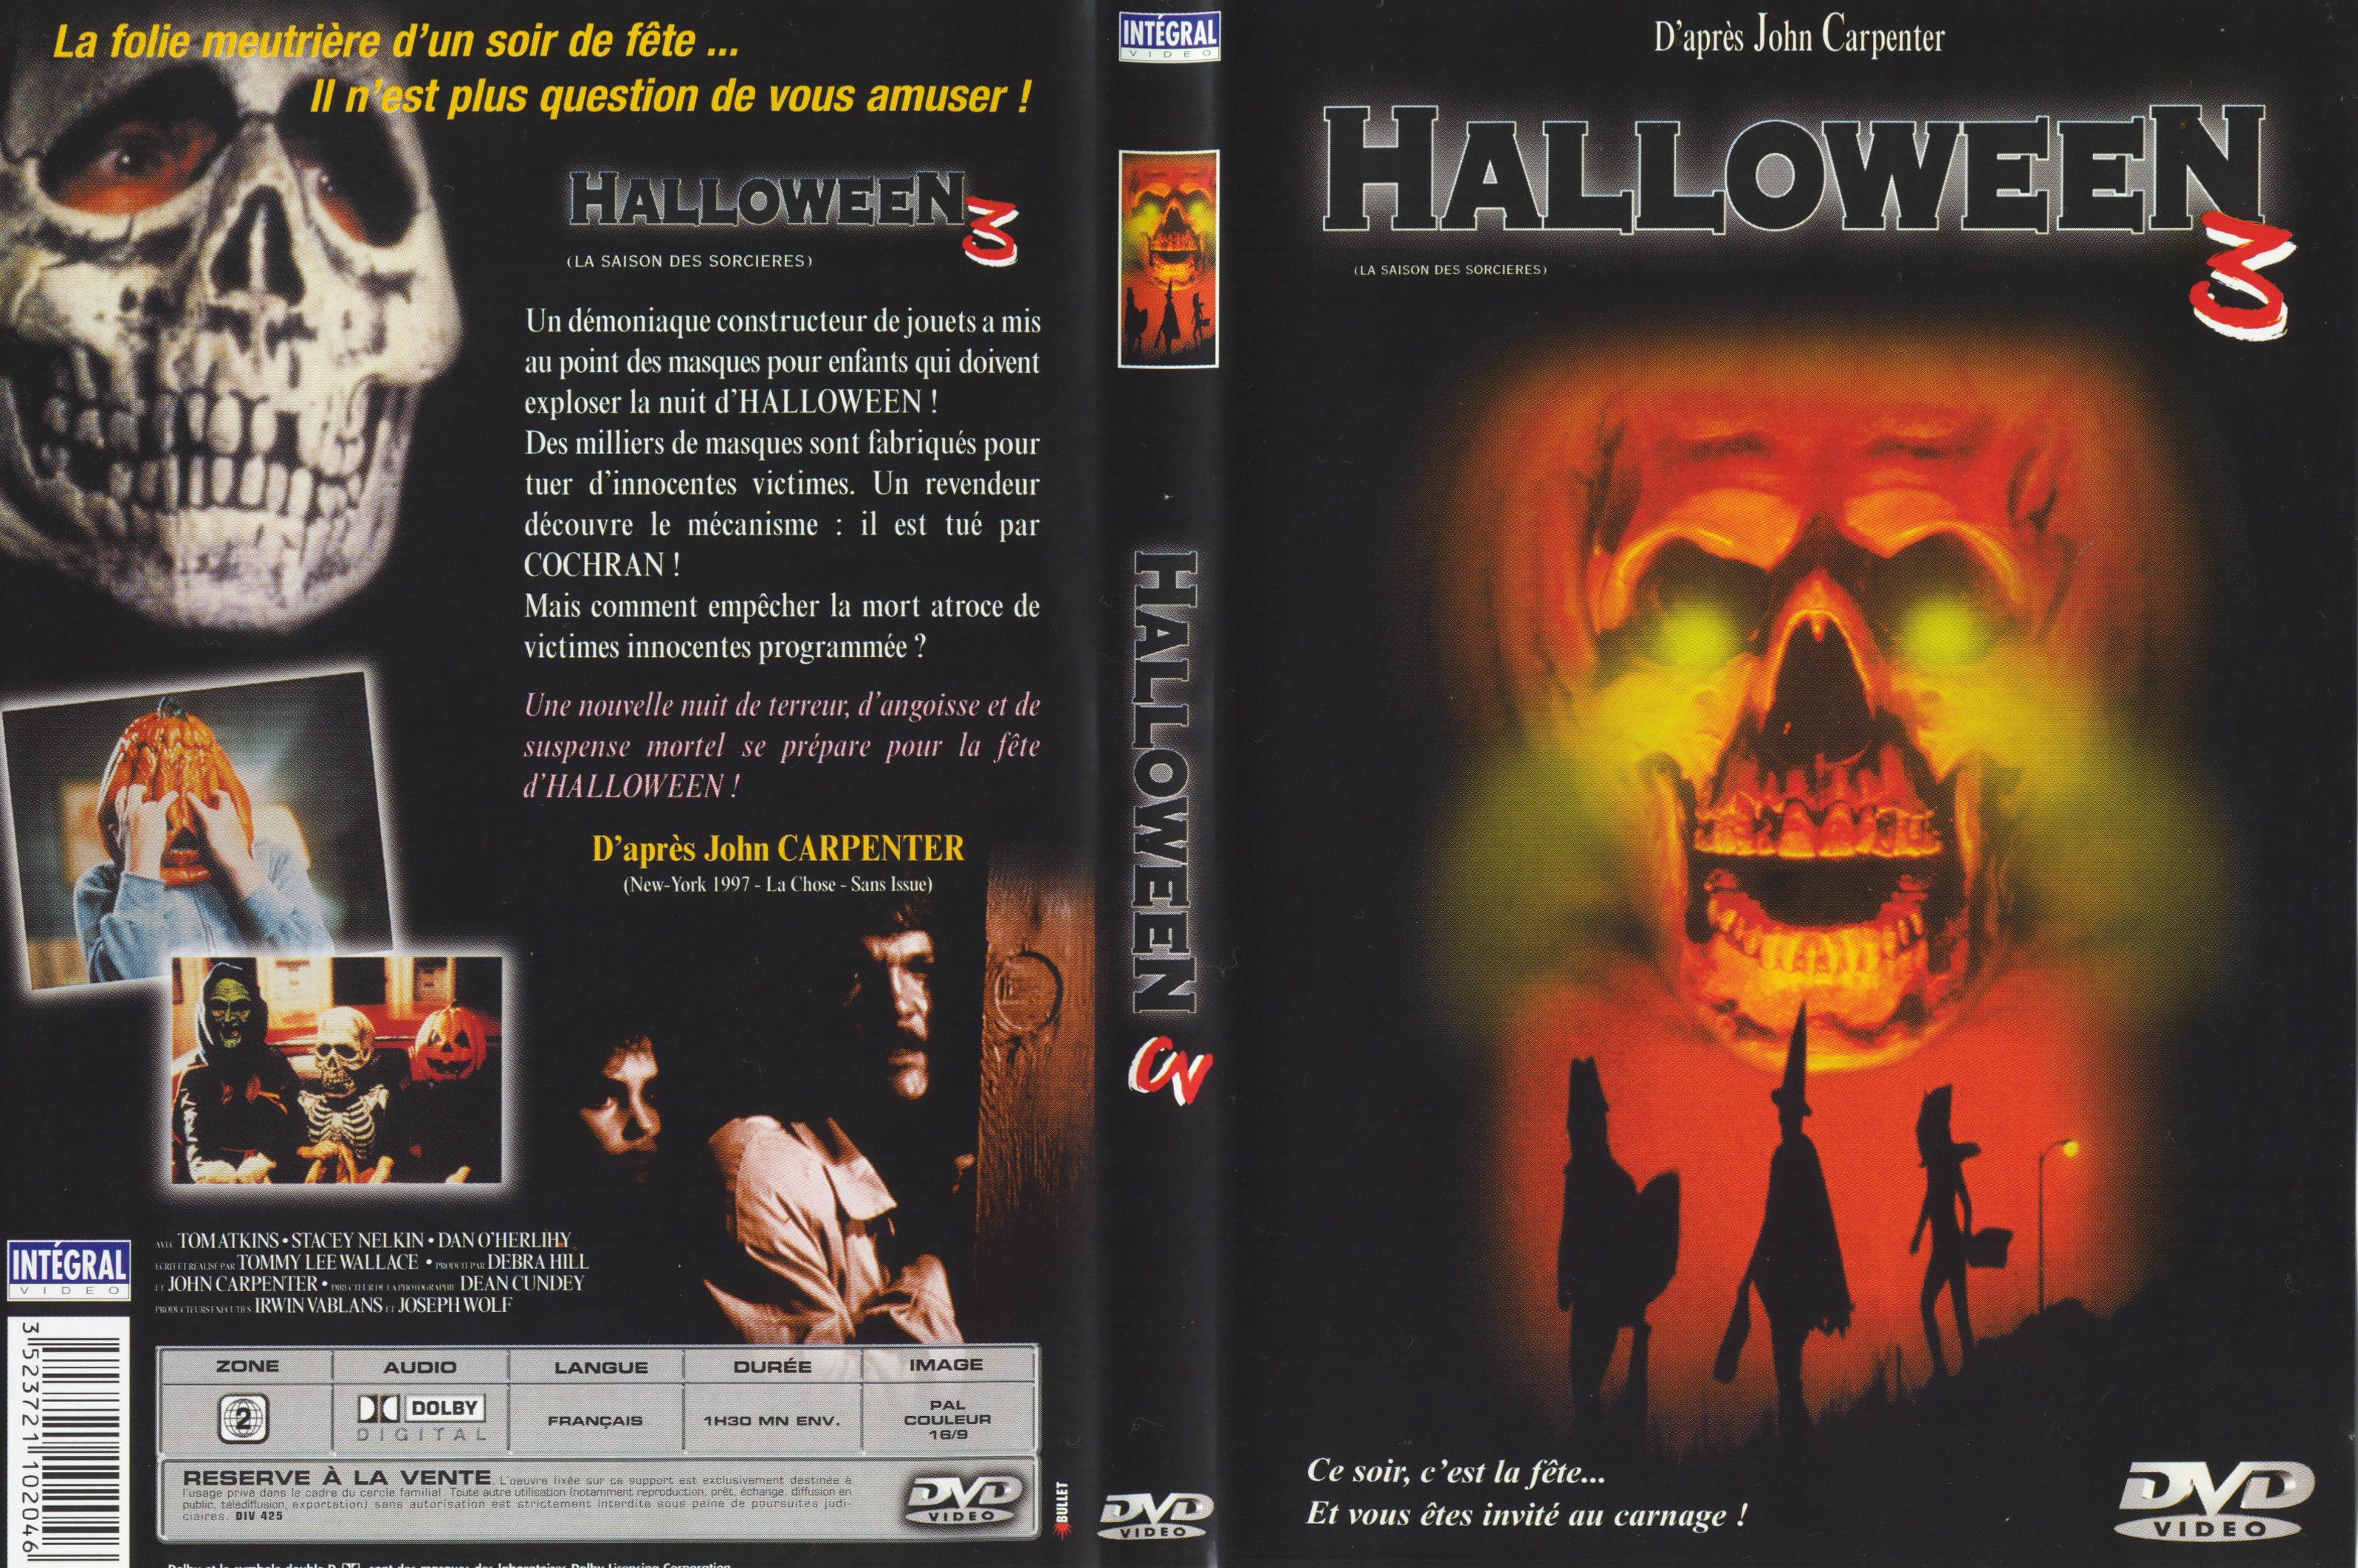 Jaquette DVD Halloween 3